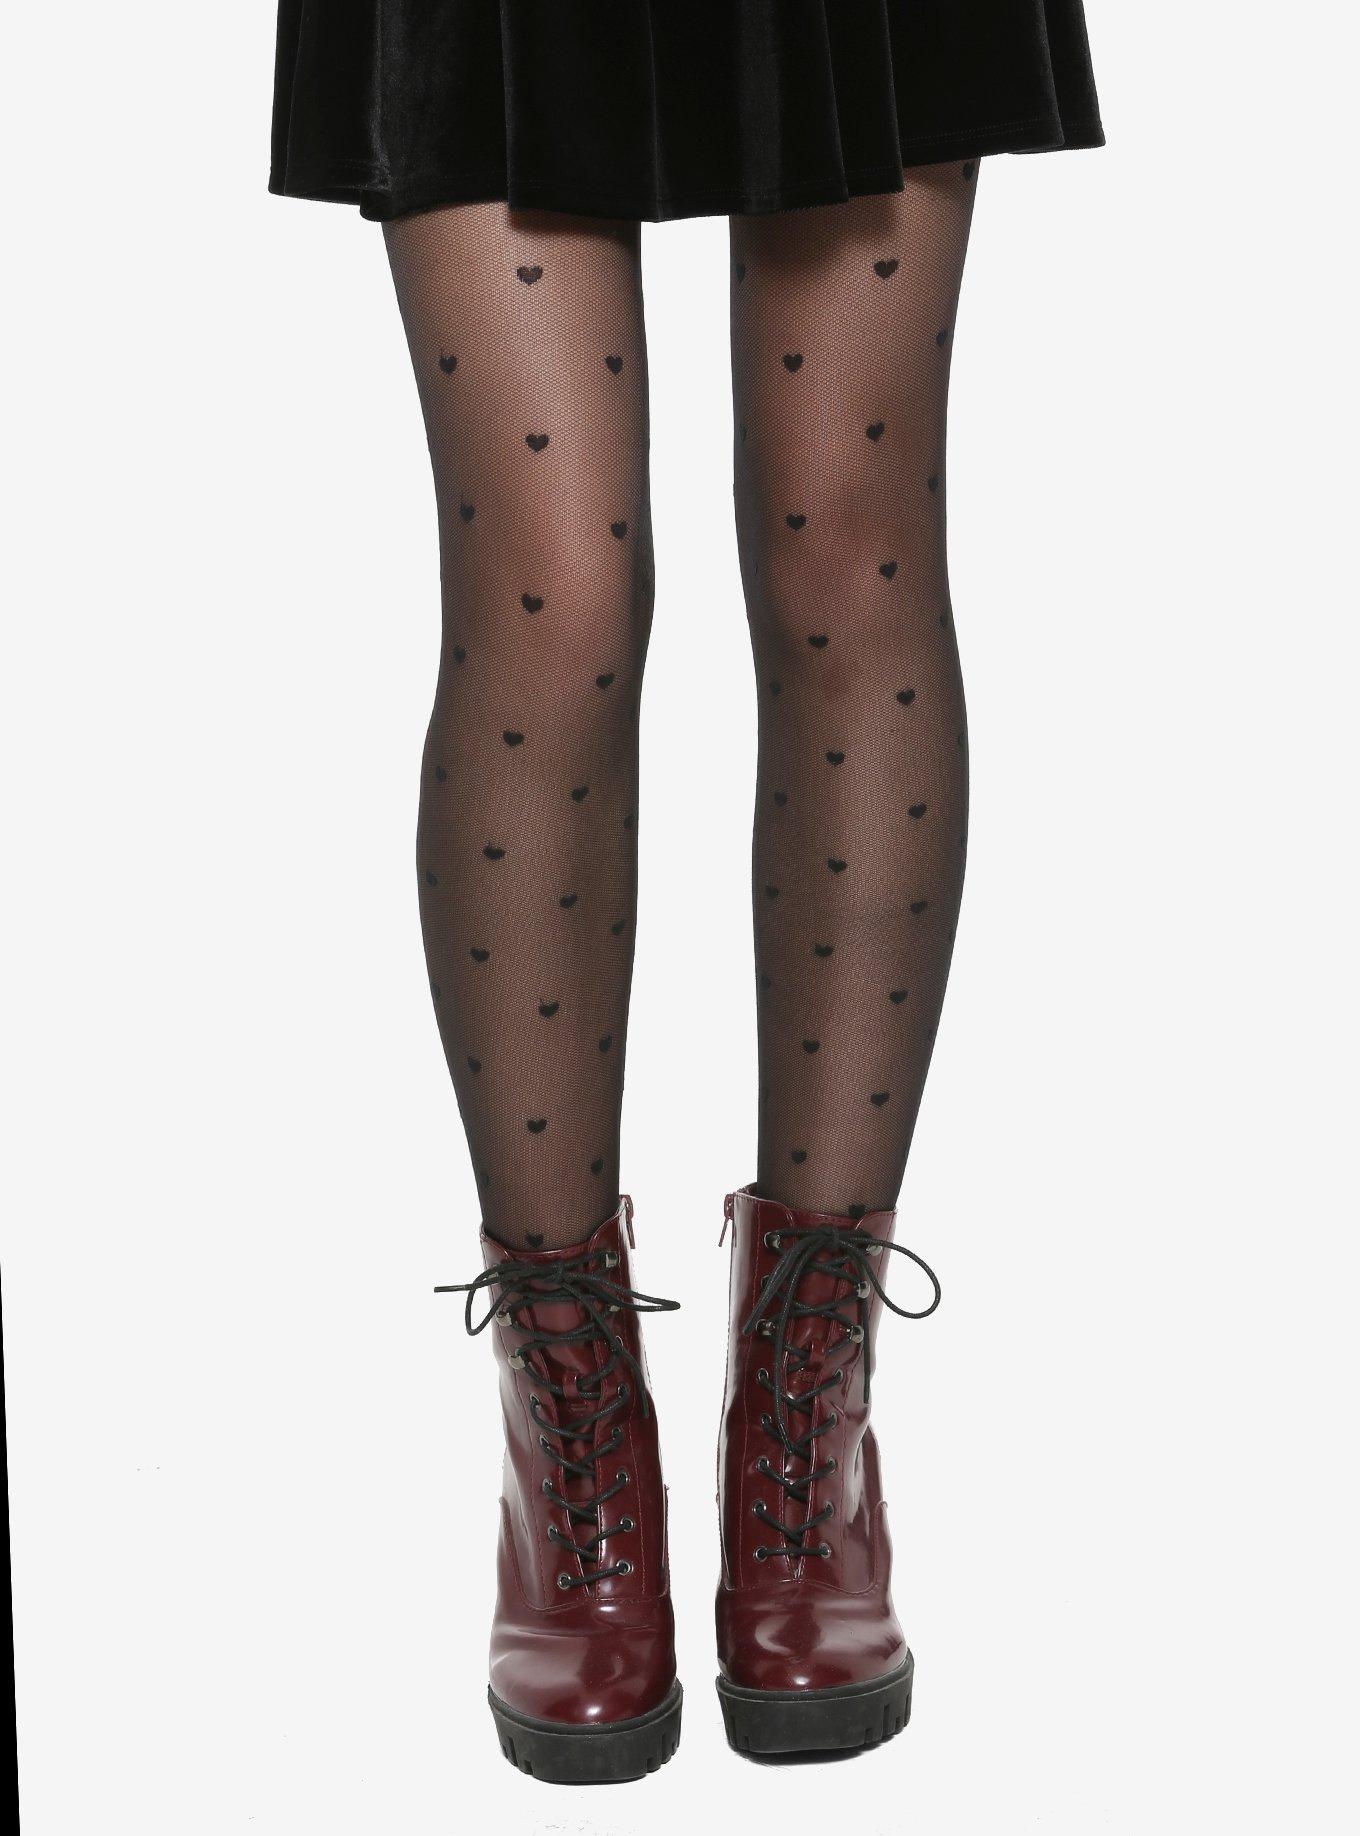 Cute Heart Pattern Black Leggings Tights Stockings · KoKo Fashion